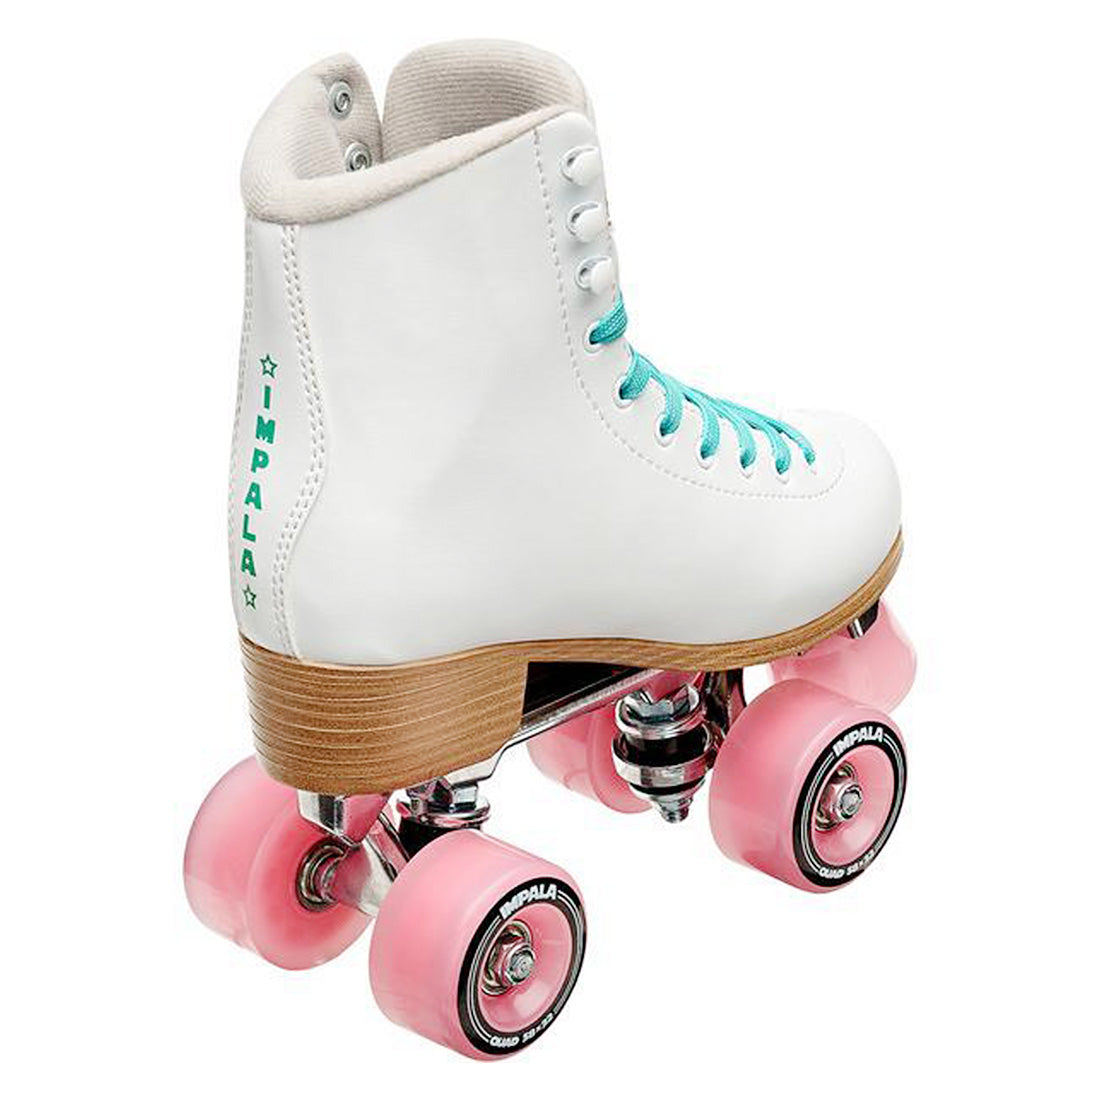 Impala Sidewalk - White Roller Skates